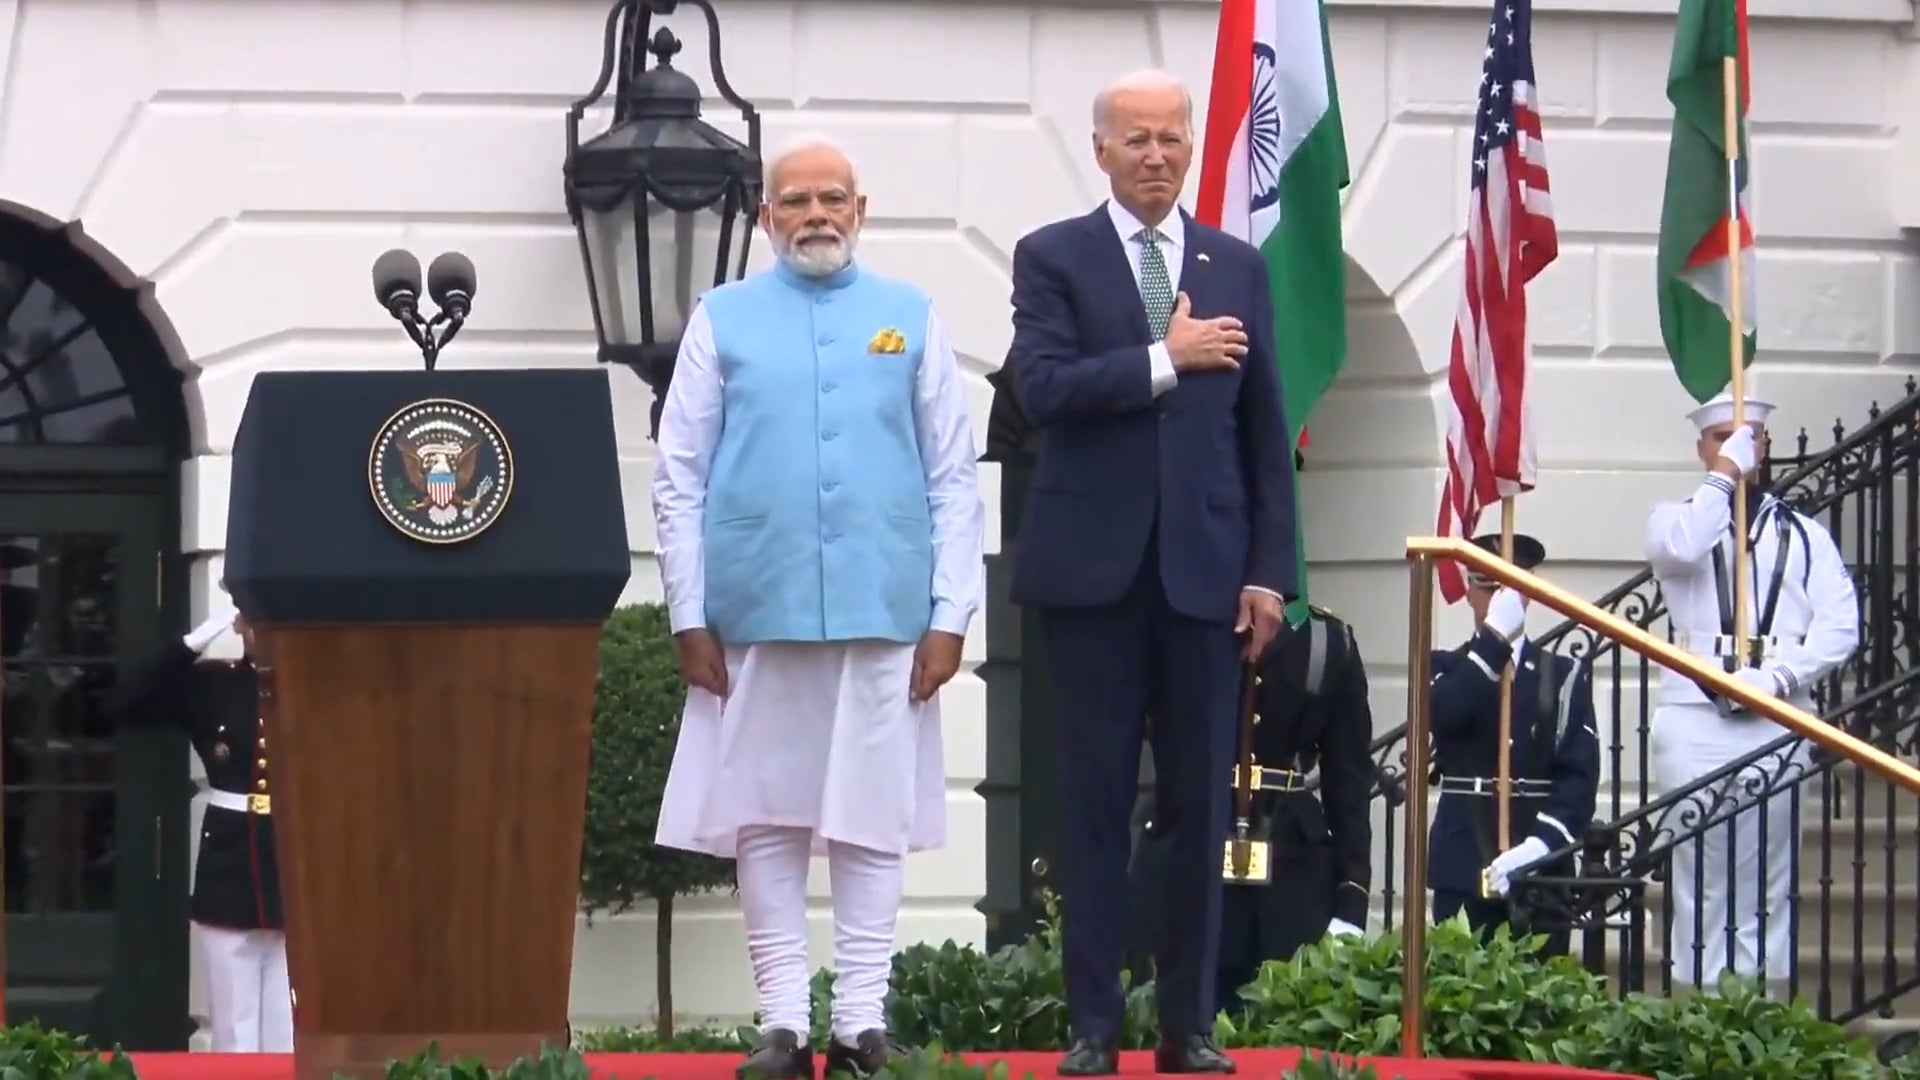 President Modi and President Biden listen to each nations national anthems